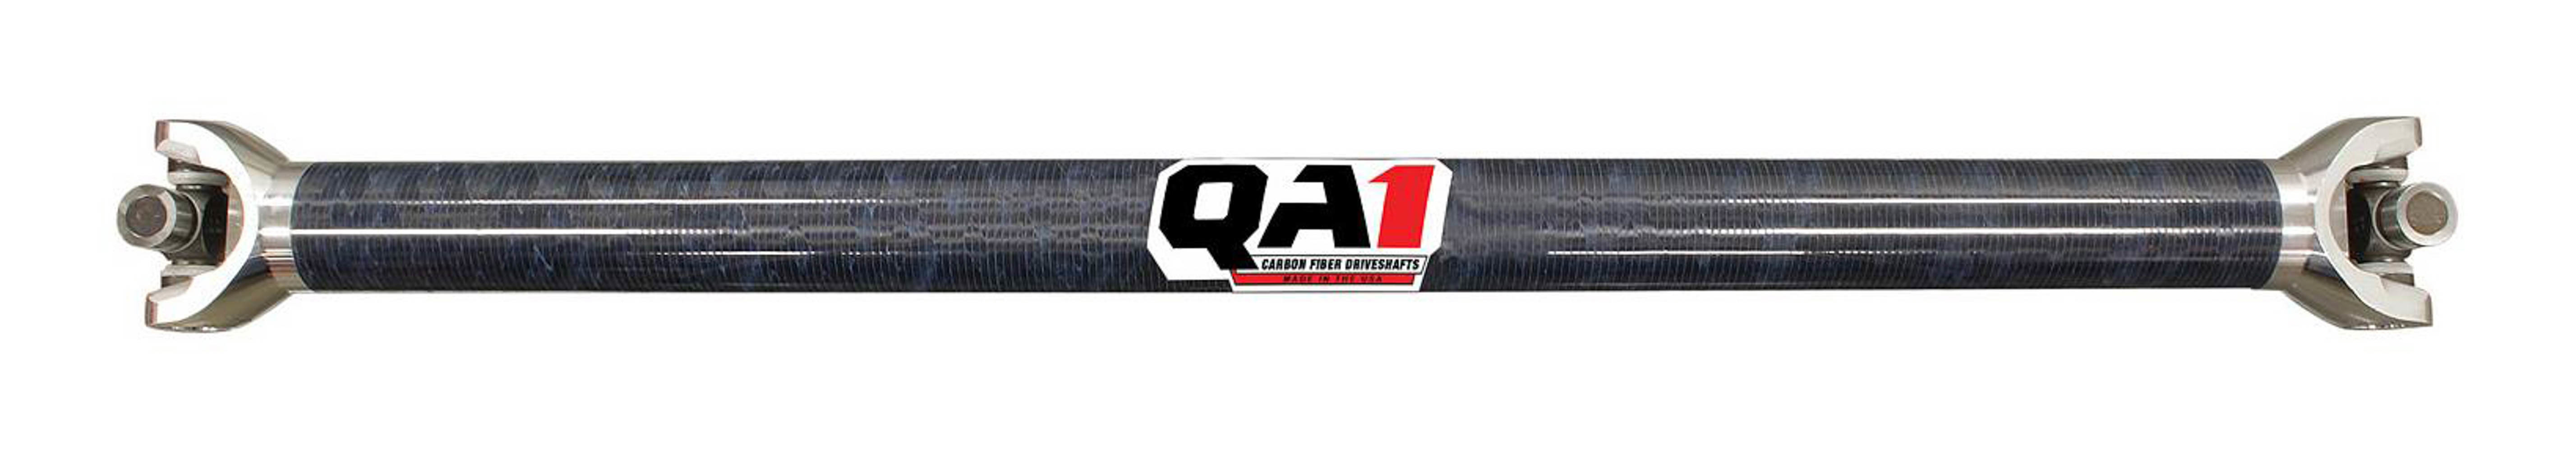 QA1 JJ-11222 Drive Shaft, Dirt Late Model, 38.5 in Long, 2.25 in OD, 1310 U-Joints, Carbon Fiber, Universal, Each